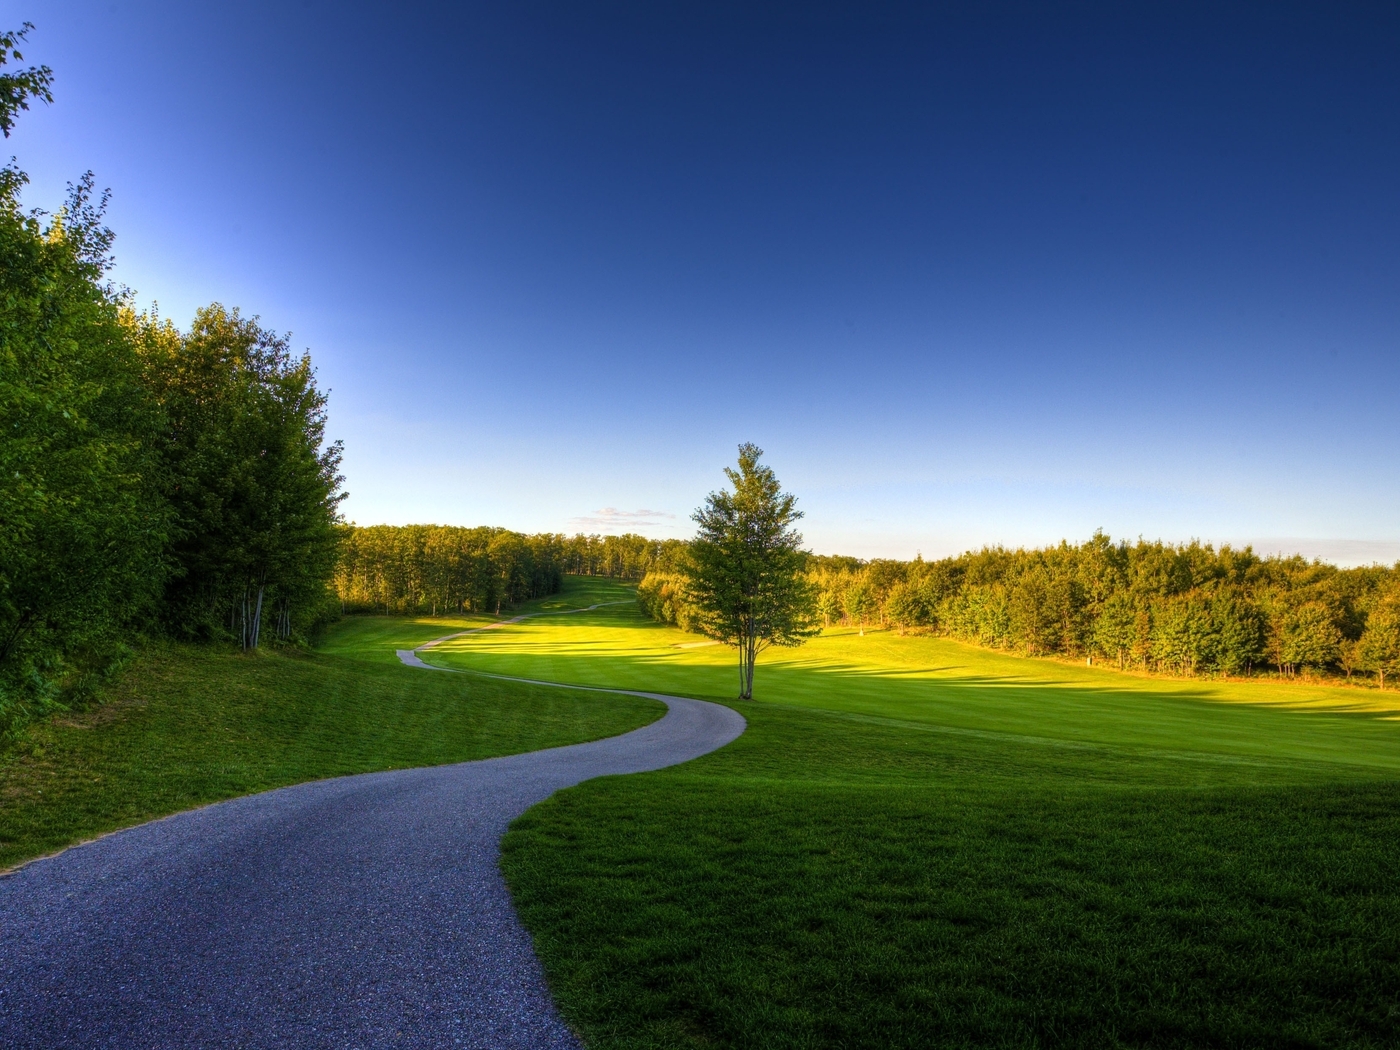 Image: Road, field, trees, summer, sky, shadow